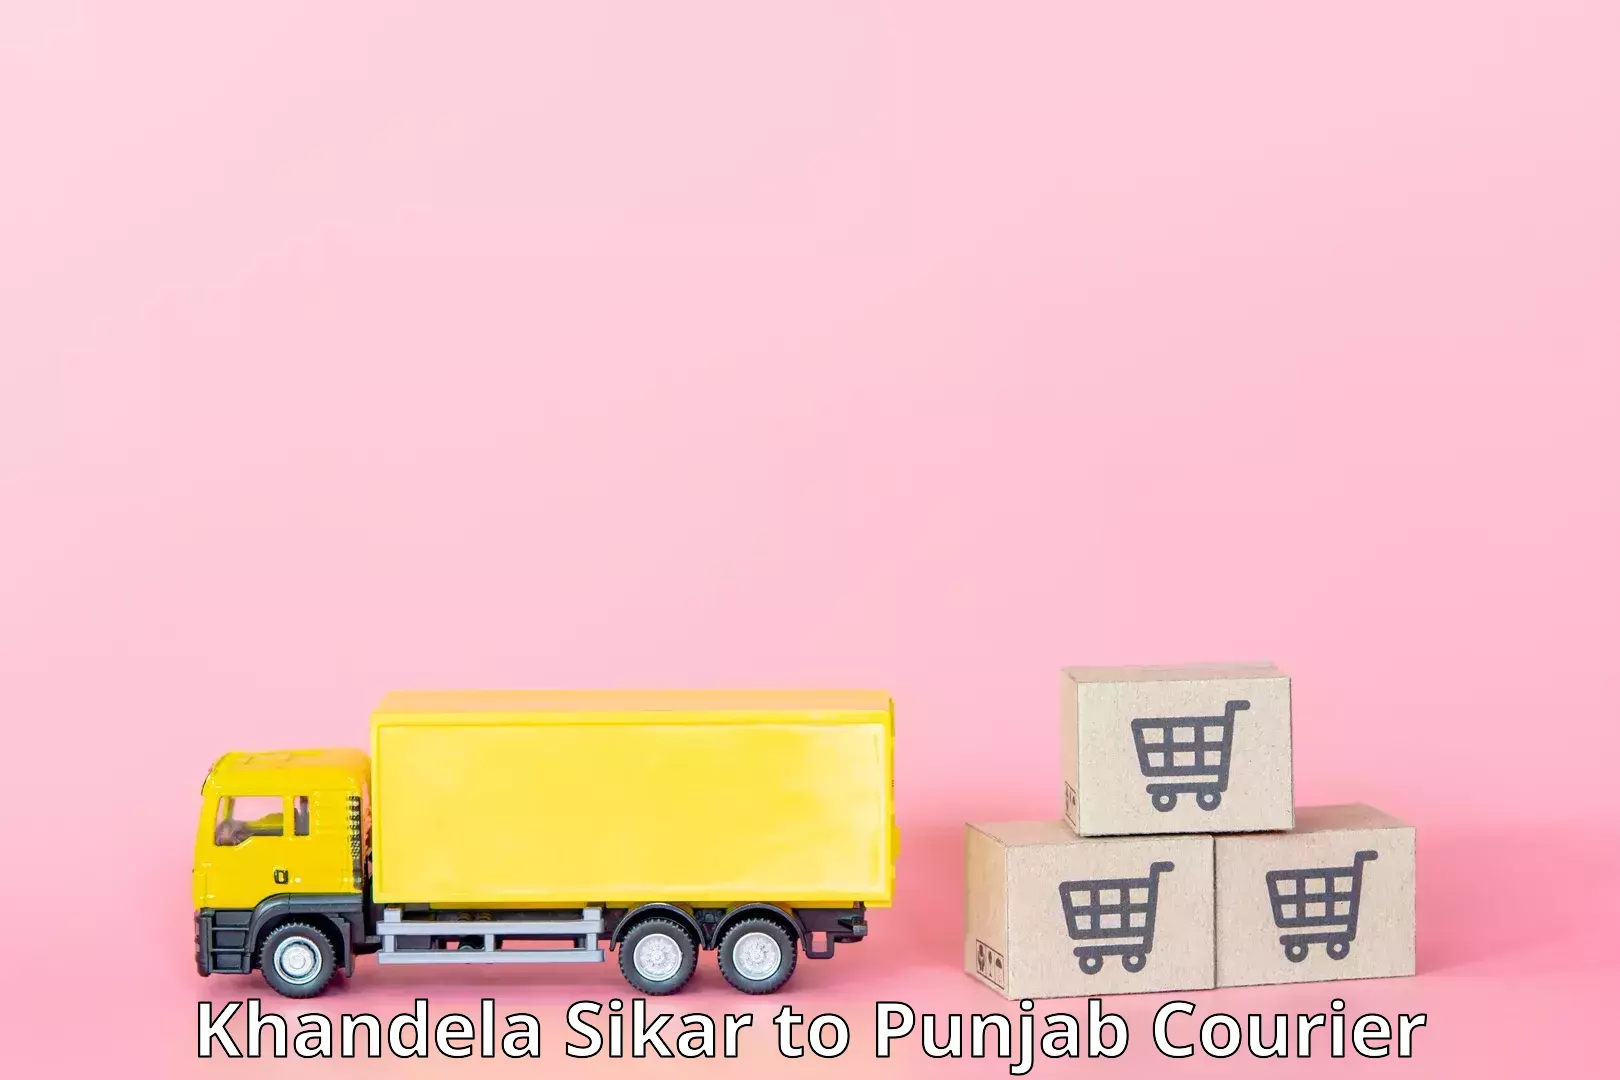 Long distance courier Khandela Sikar to Punjab